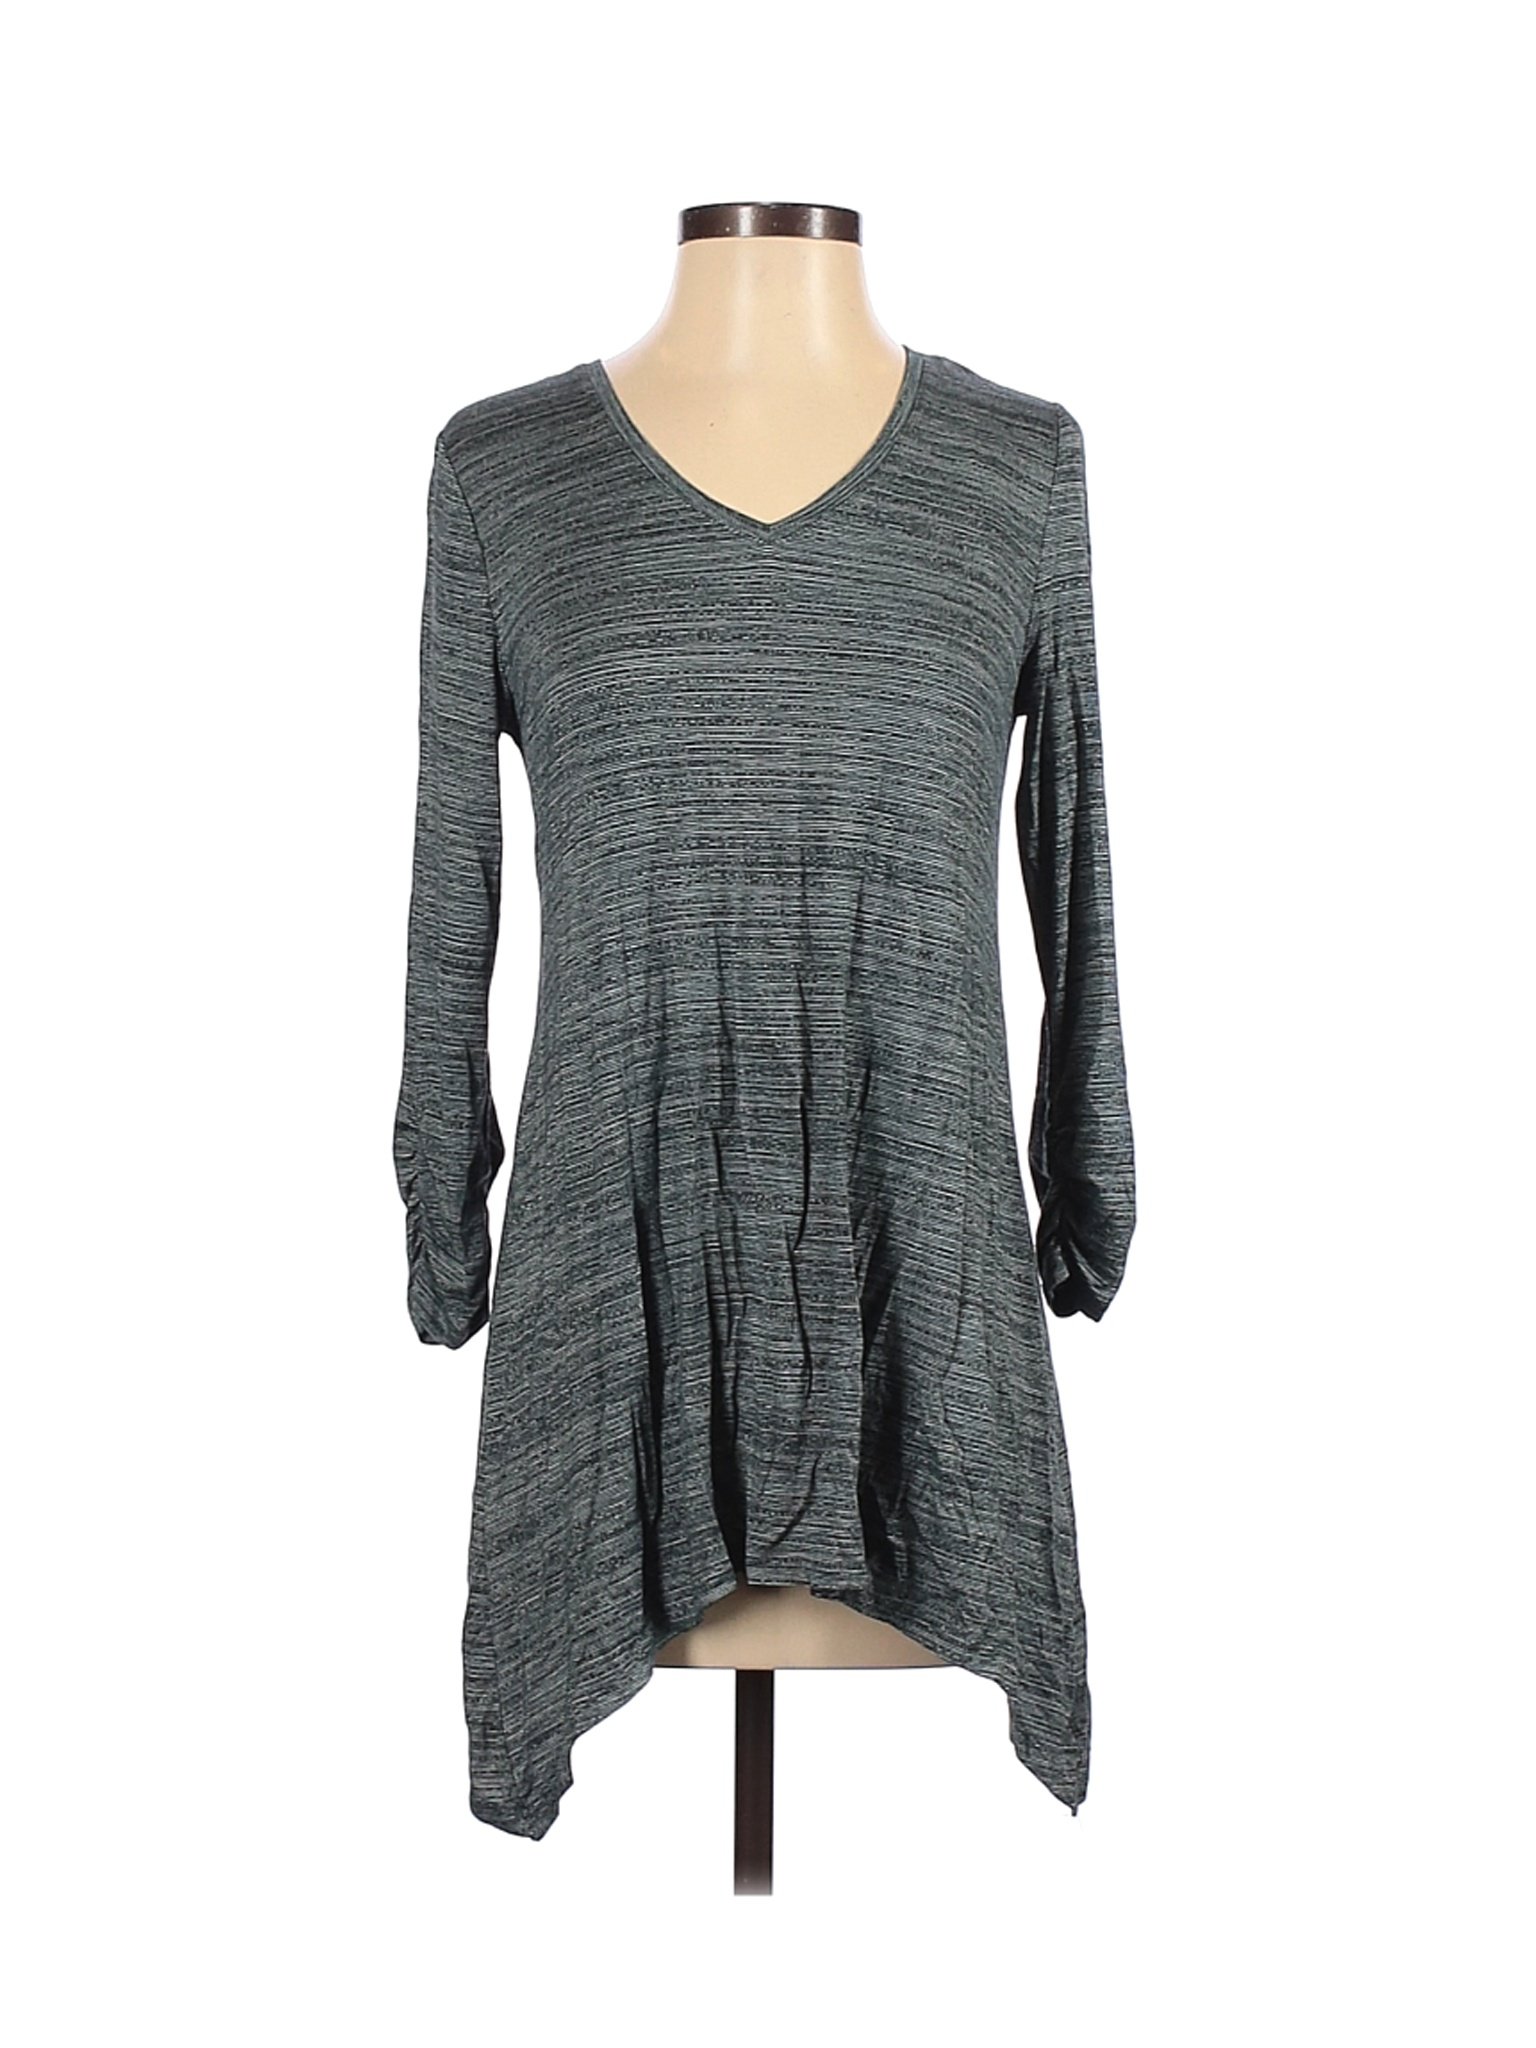 Apt. 9 Women Gray Long Sleeve T-Shirt XS | eBay